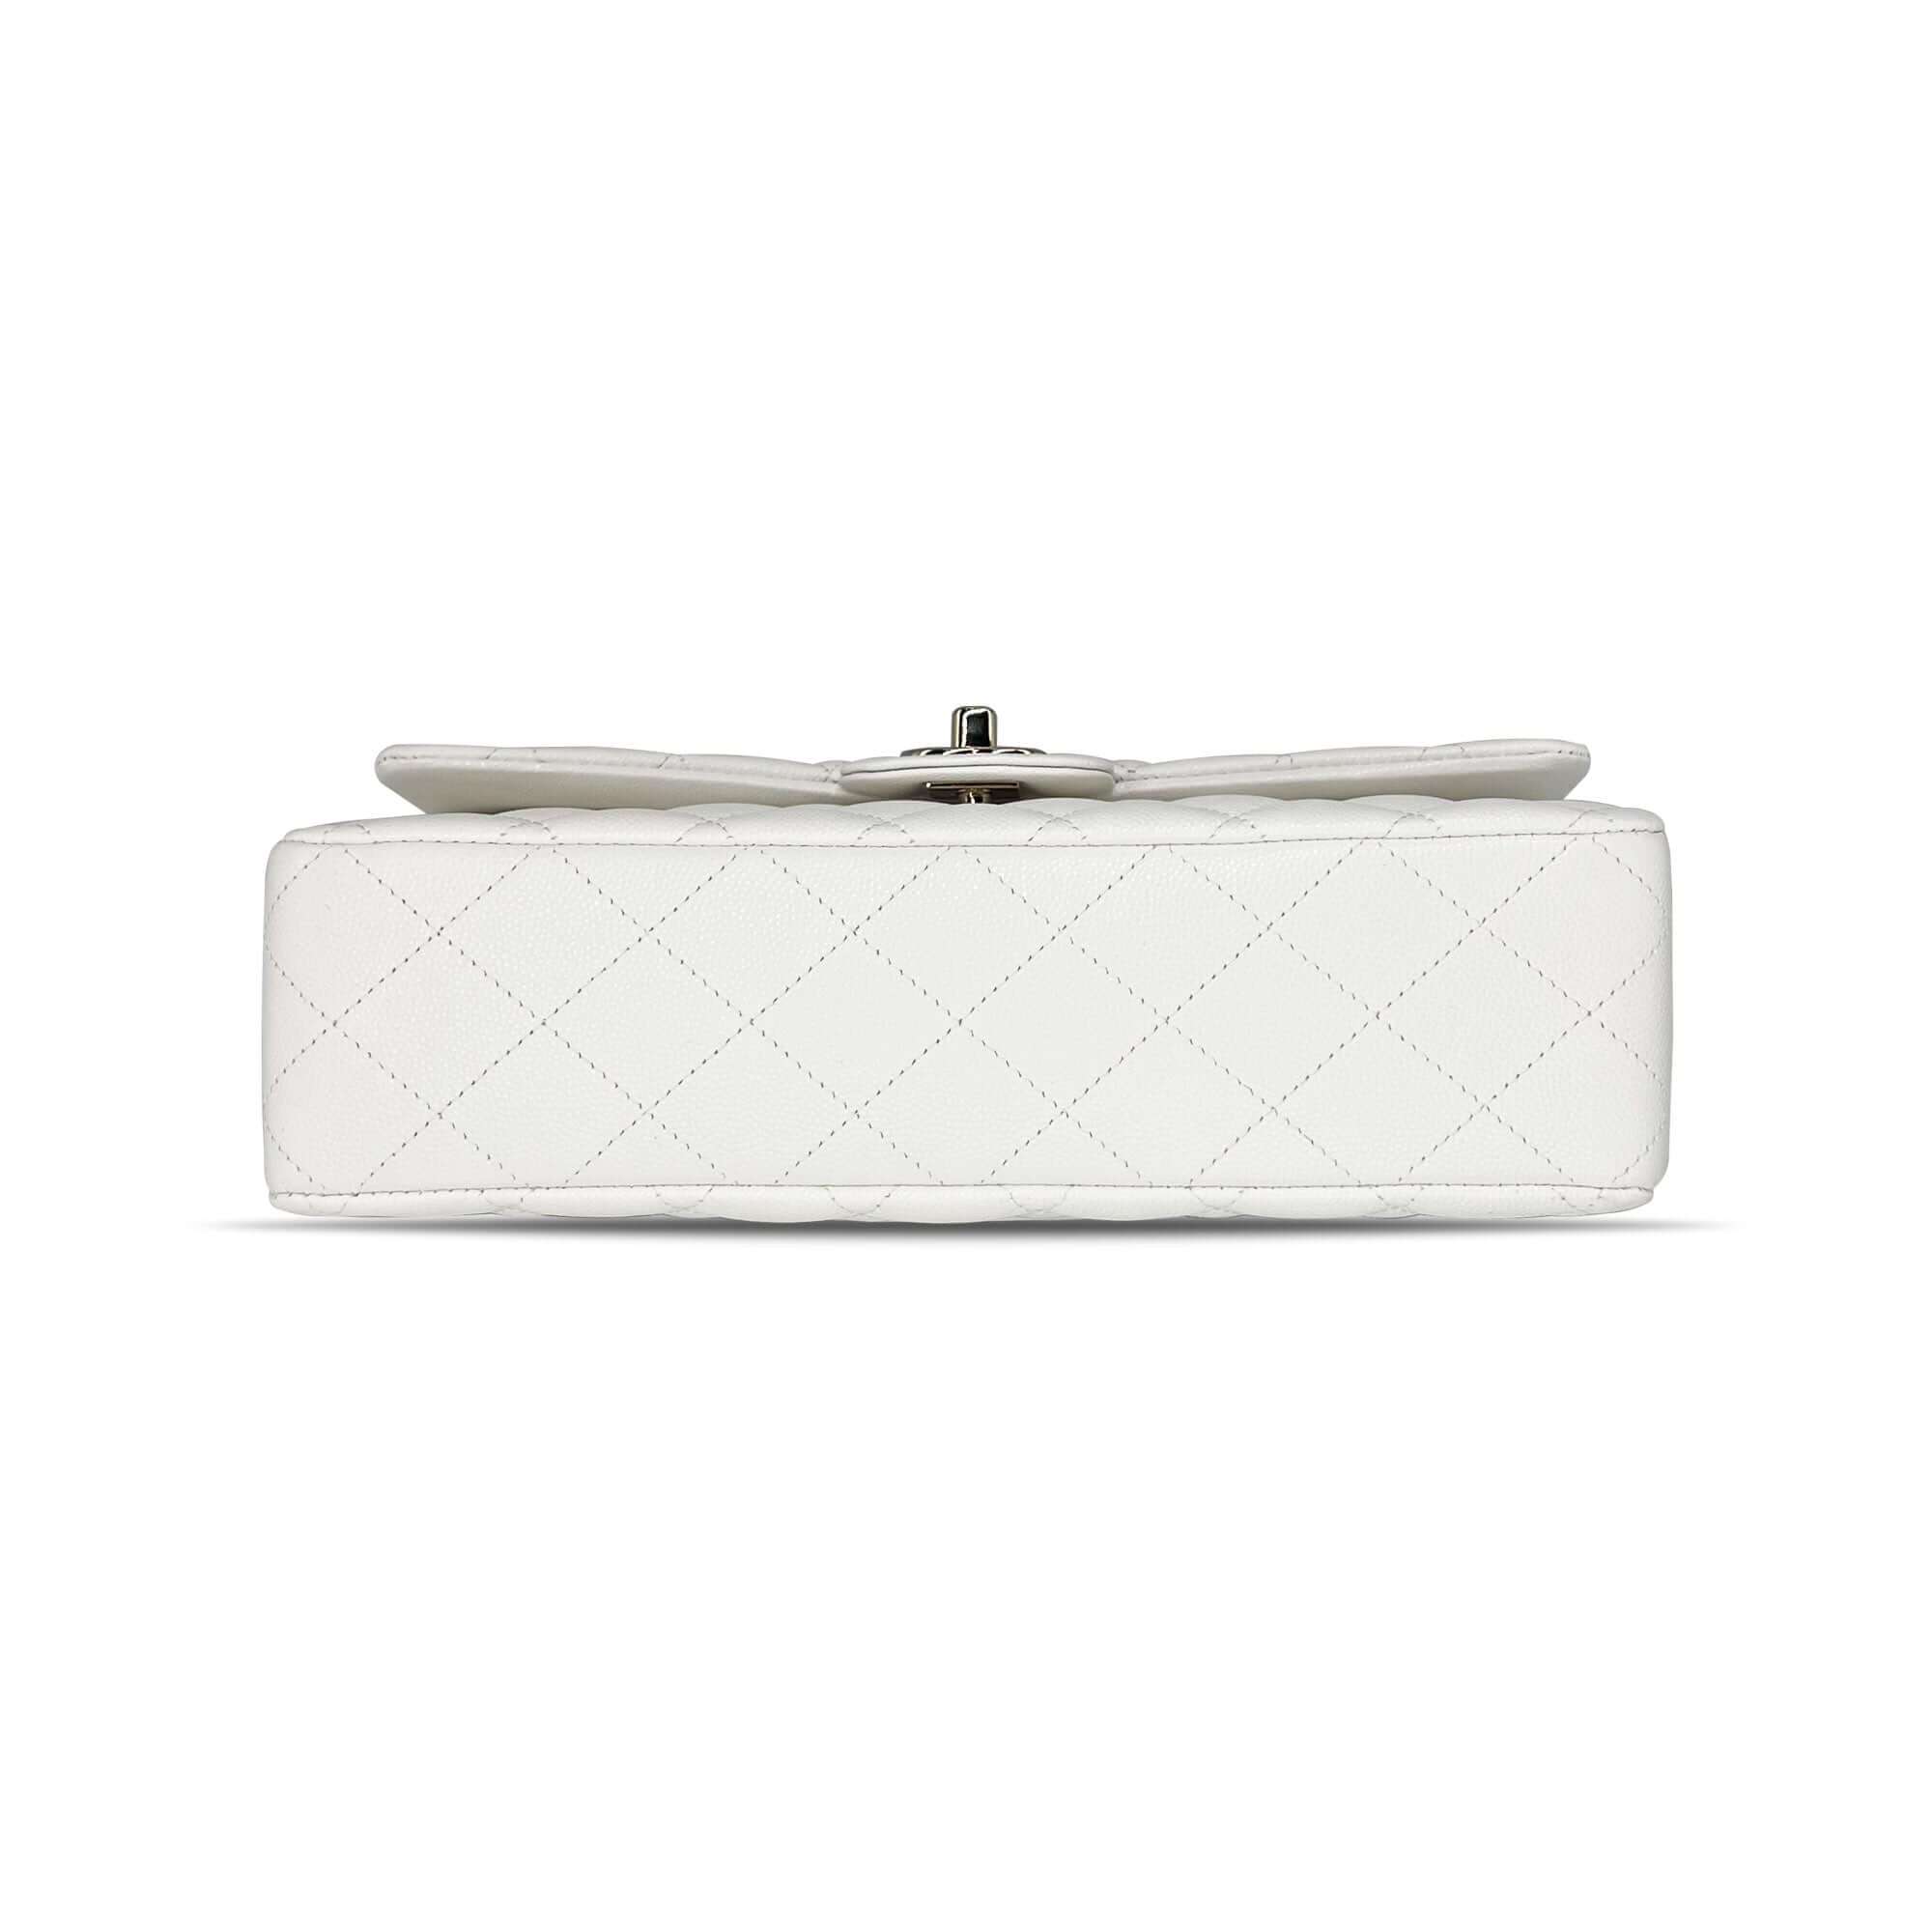 Chanel optic white caviar leather double flap closure bag